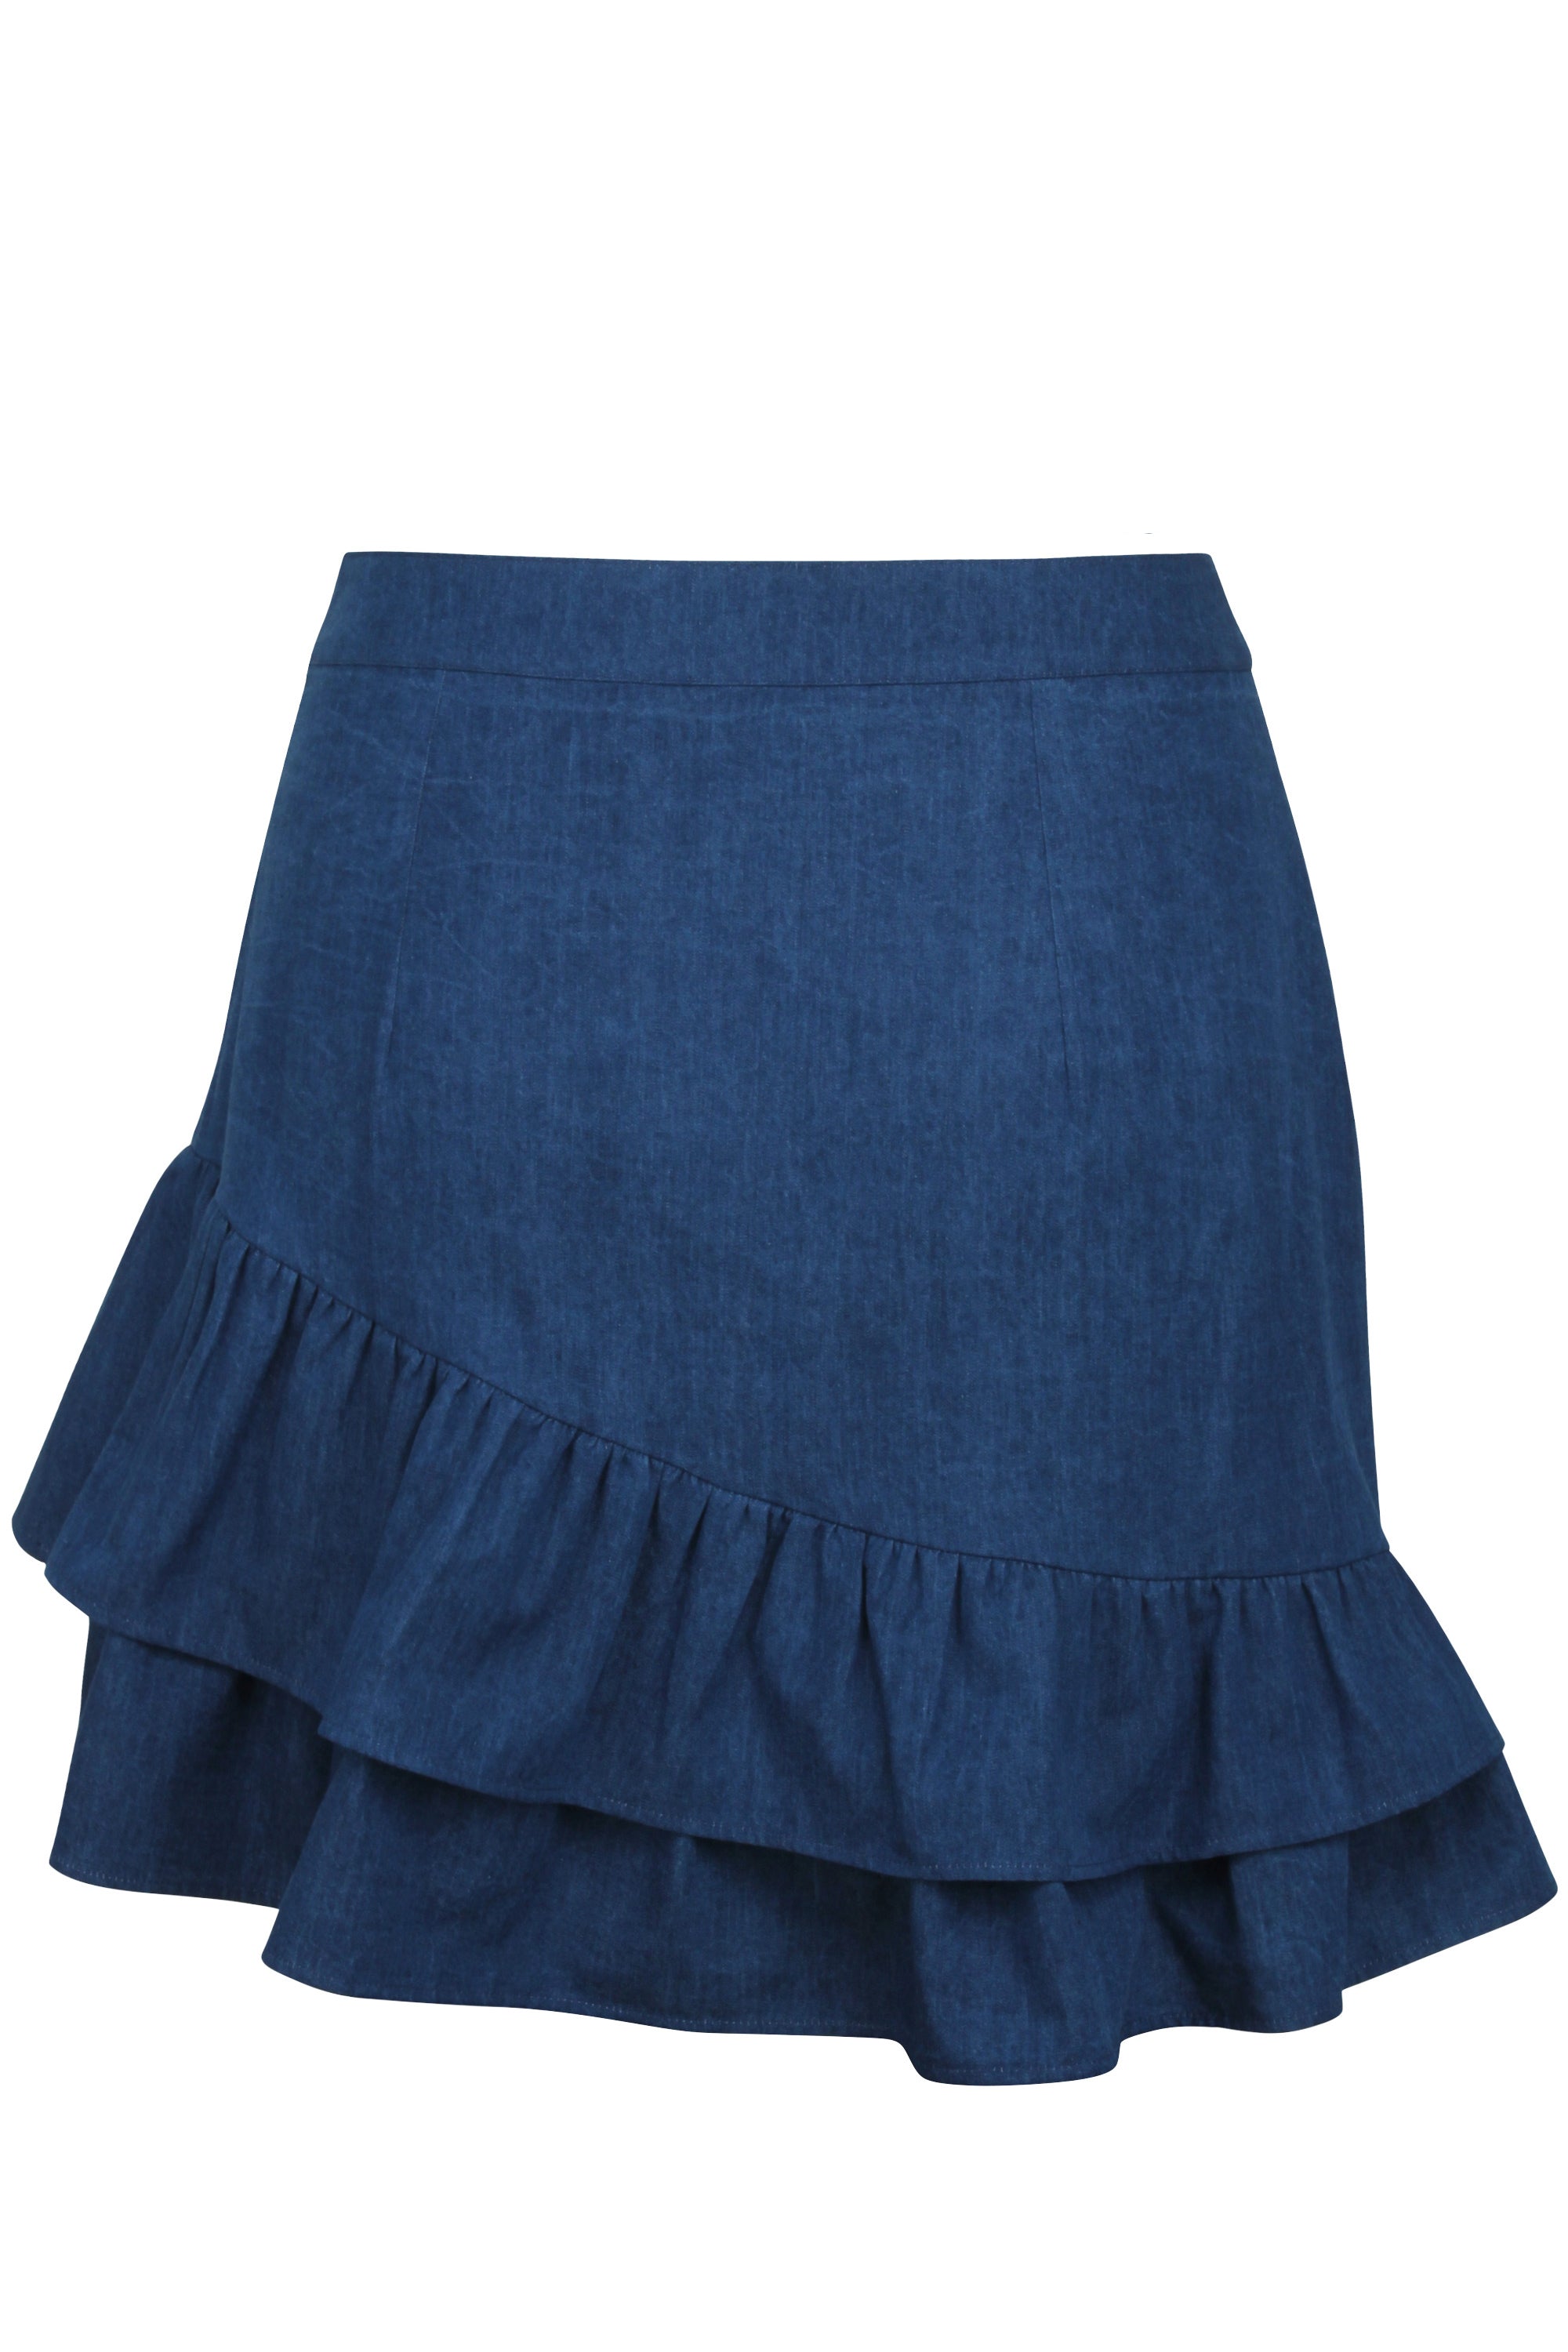 Sammy Blue Chambray Skirt With Asymmetric Frill